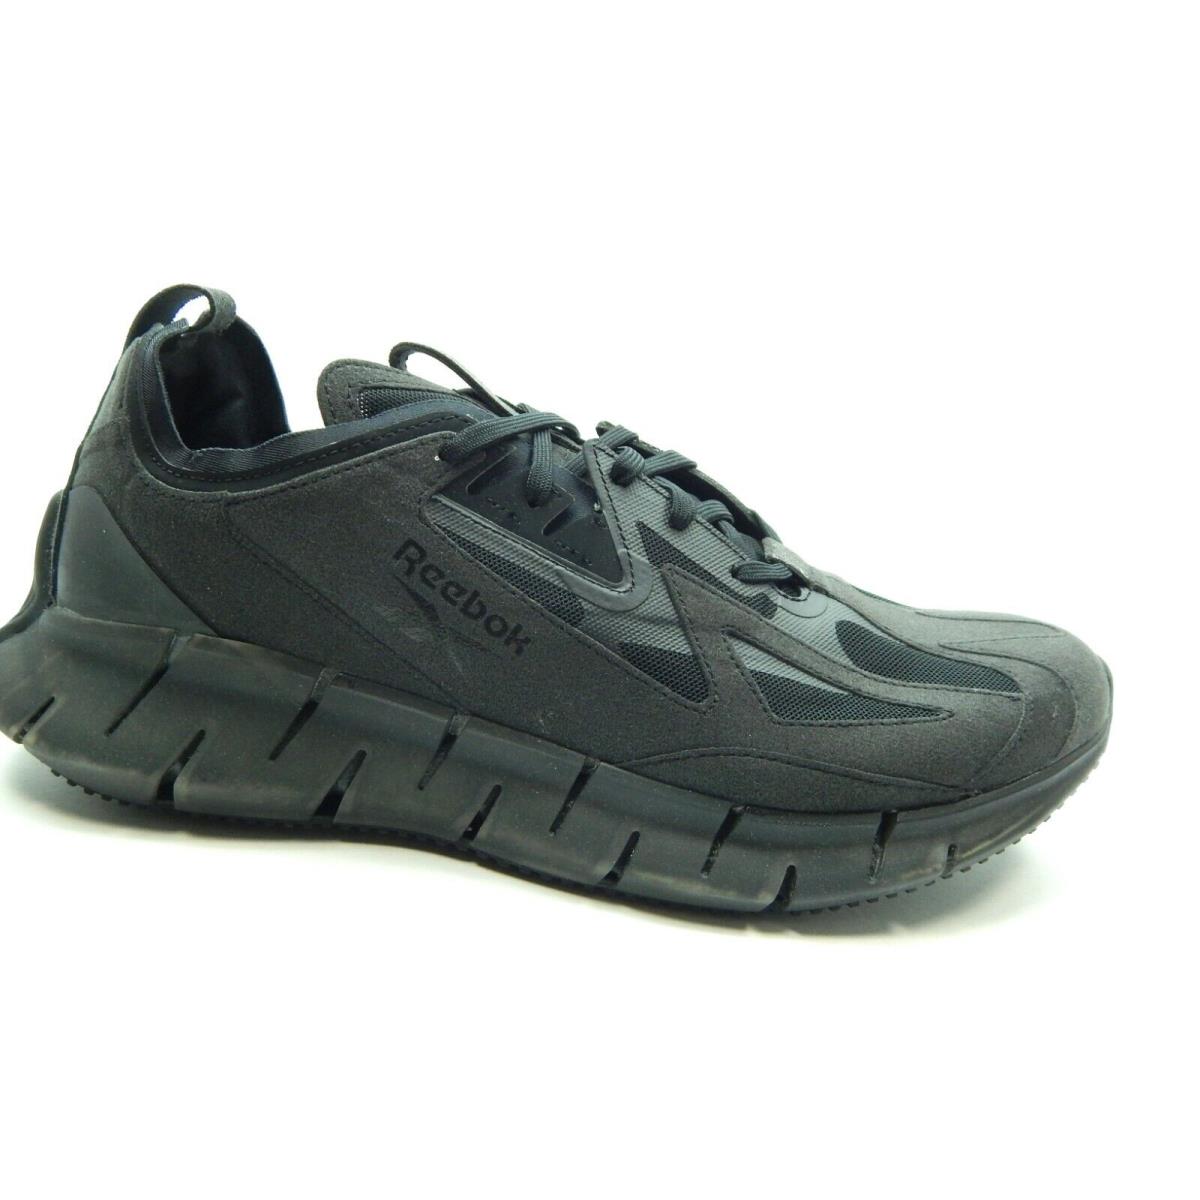 Reebok Zig Kinetica Concept Type Men Running Shoes FW5737 Black Grey Size 8.5 - Black